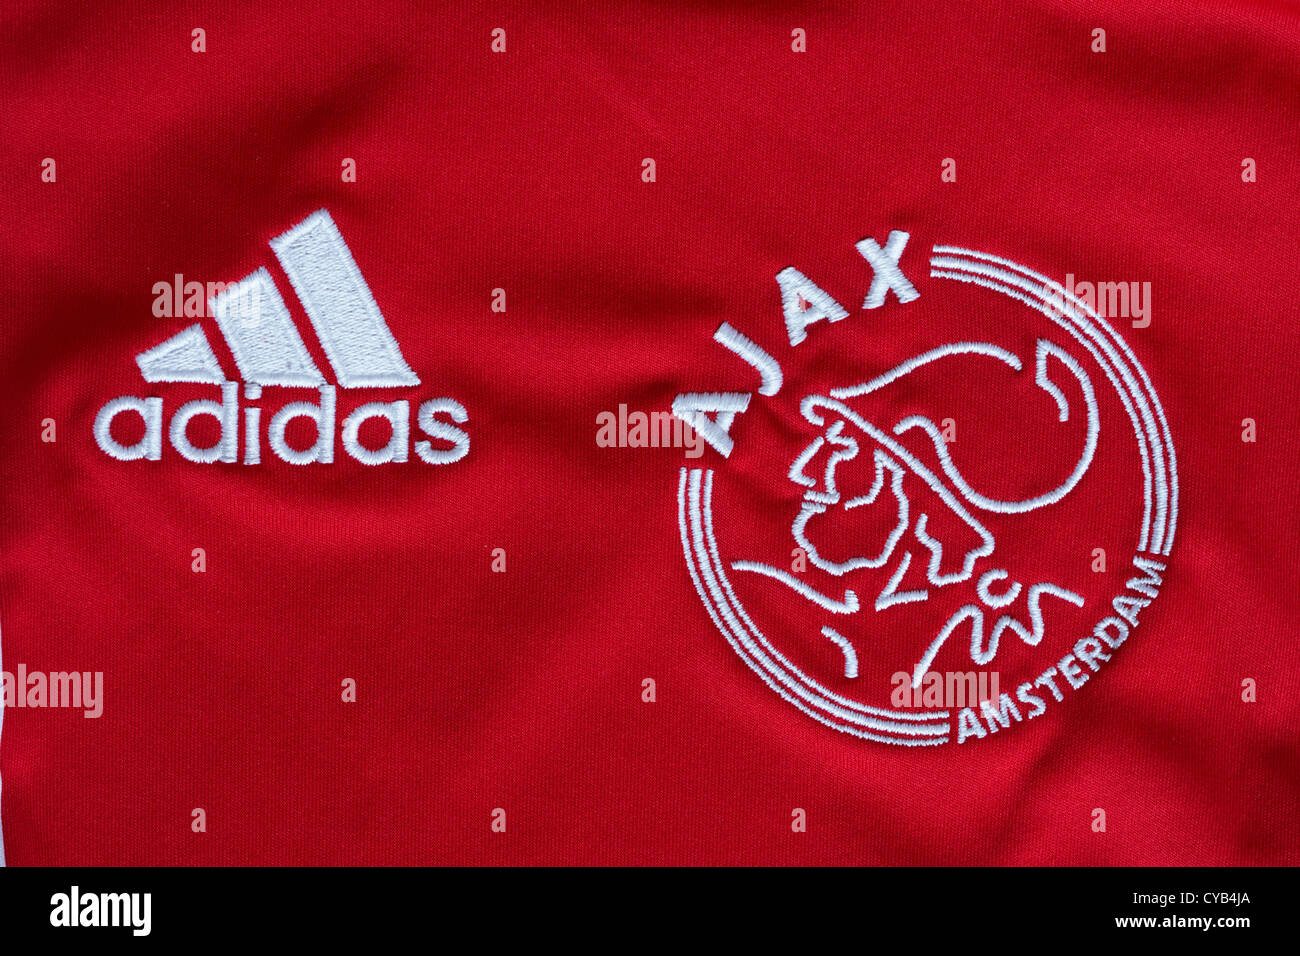 Adidas und Ajax Amsterdam logo Logos auf red Football Shirt Stockfoto